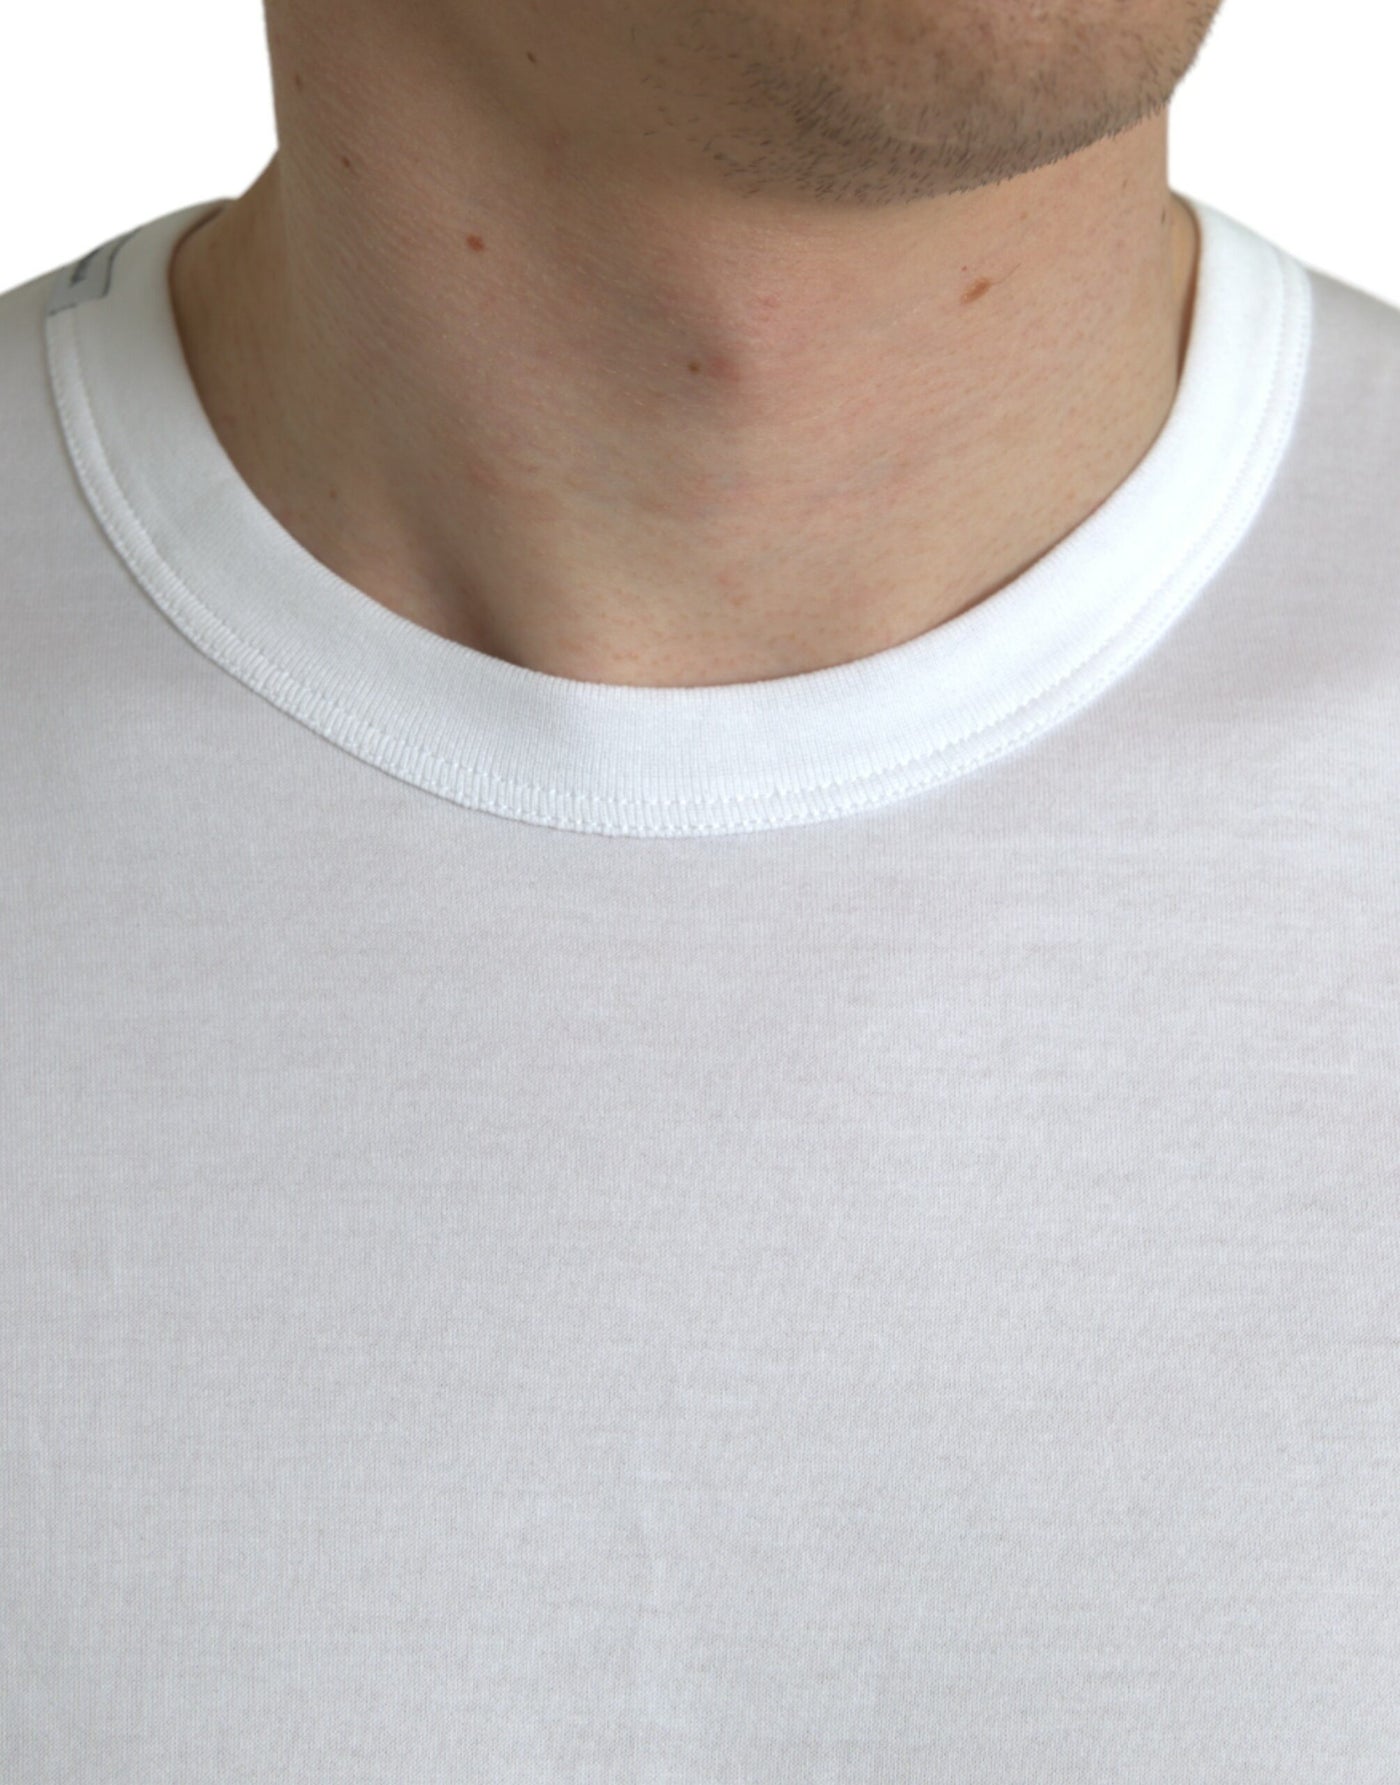 Dolce & Gabbana White Logo Crew Neck Short Sleeves T-shirt